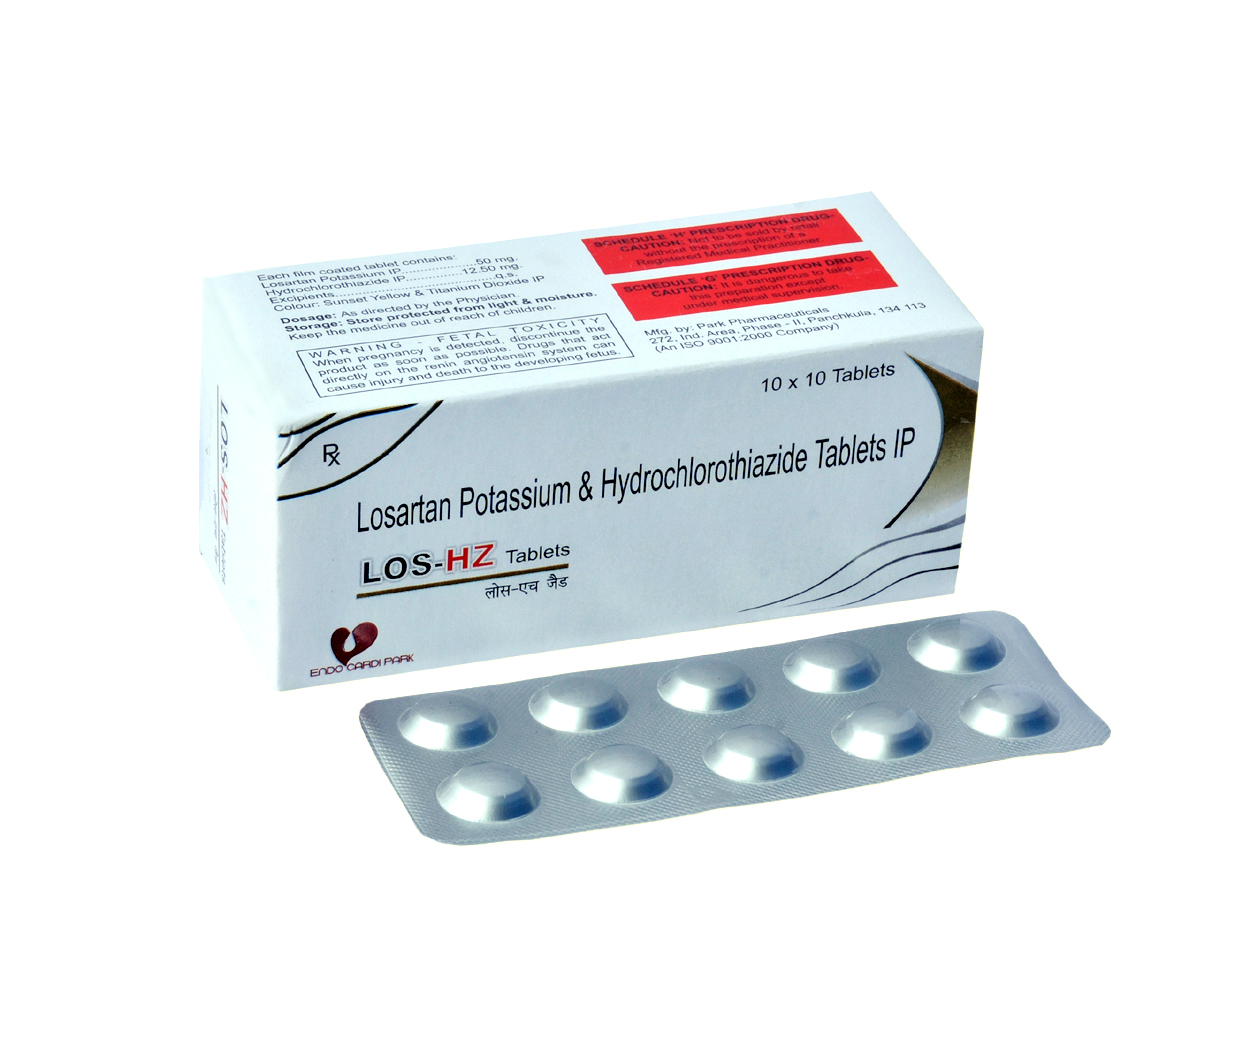 Product Name: LOS HZ, Compositions of LOS HZ are Losartan Potassium & Hydrochlorothiazide Tablets IP - Park Pharmaceuticals